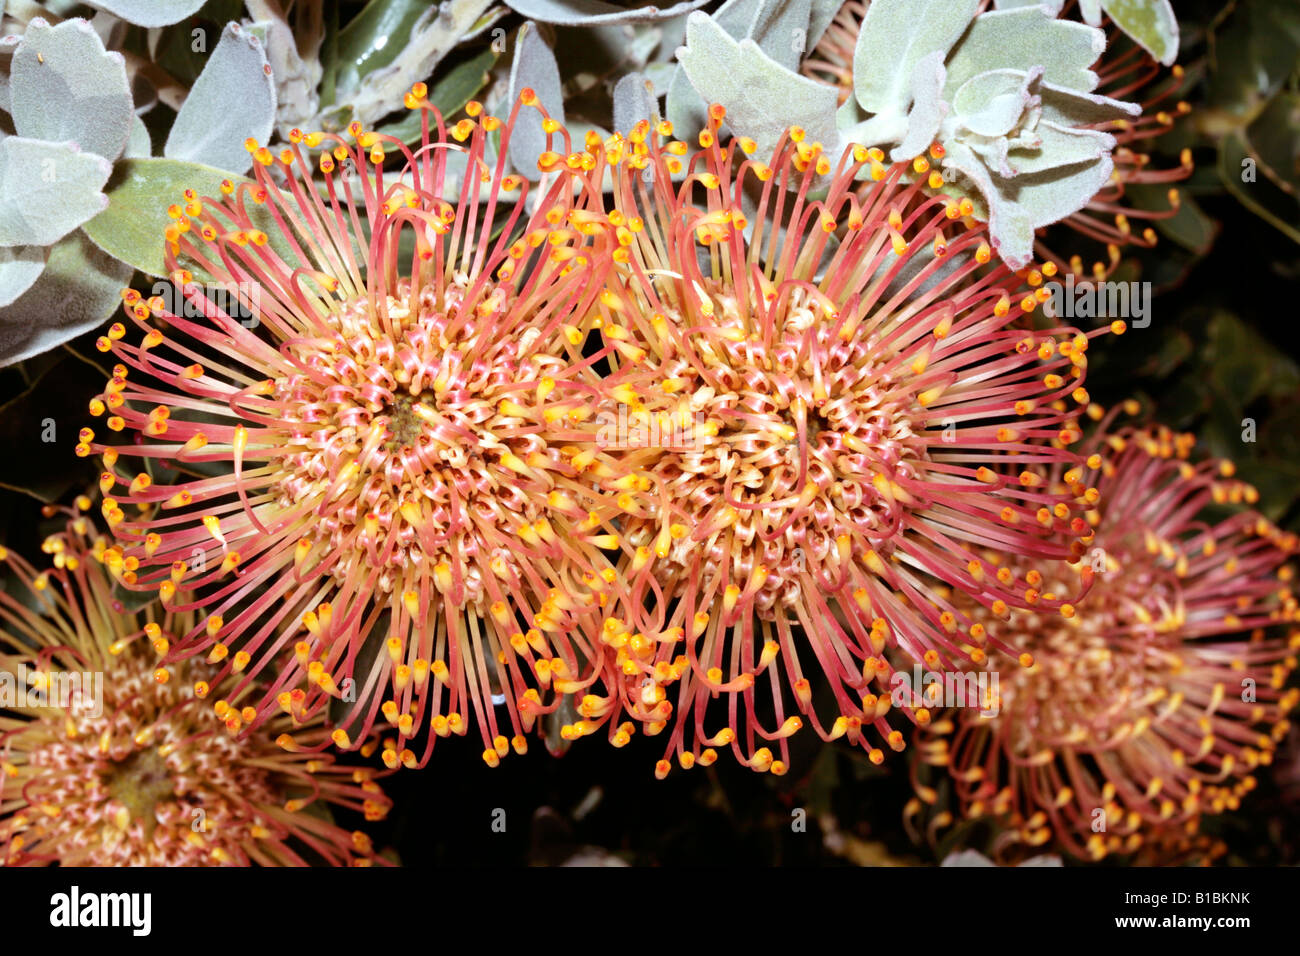 Pincushion / Luisiesboom- Leucospermum cordifolium - member of Fireworks group- Family Proteaceae Stock Photo